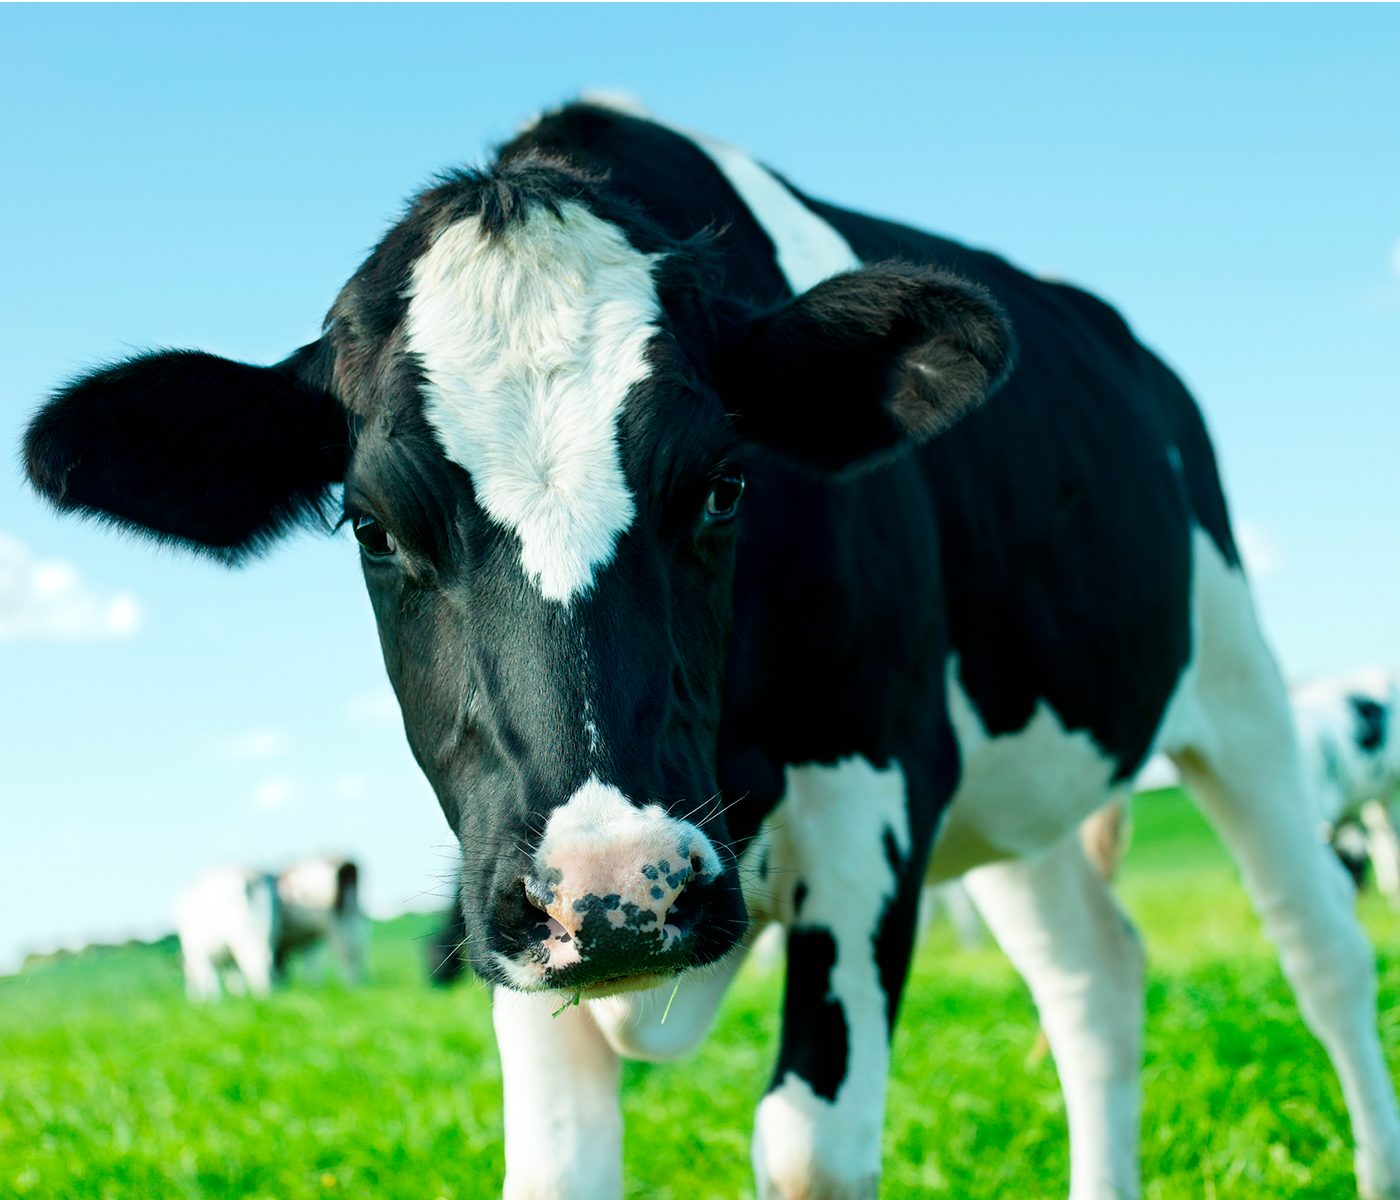 Nitrogen use in dairy cows